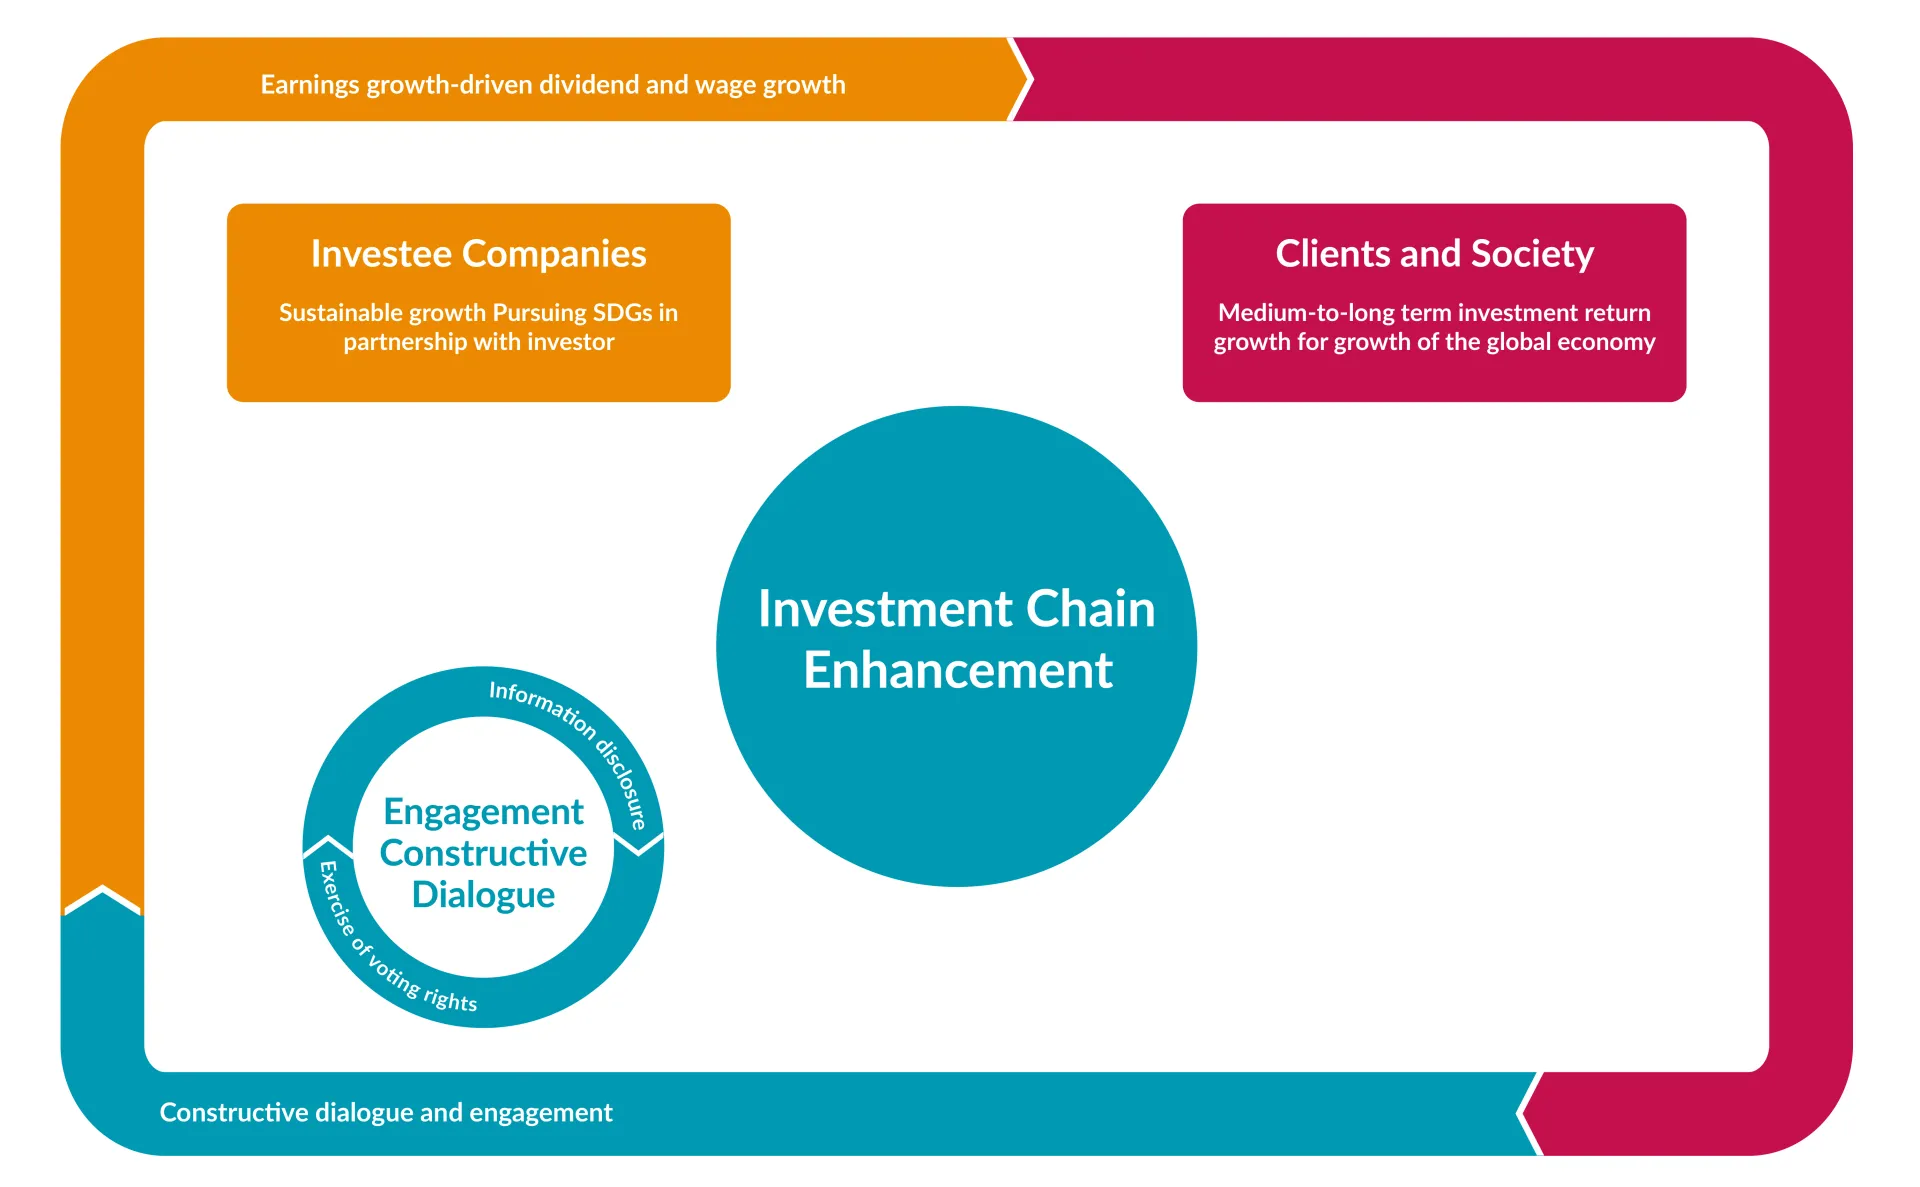 Investment Chain Enhancement